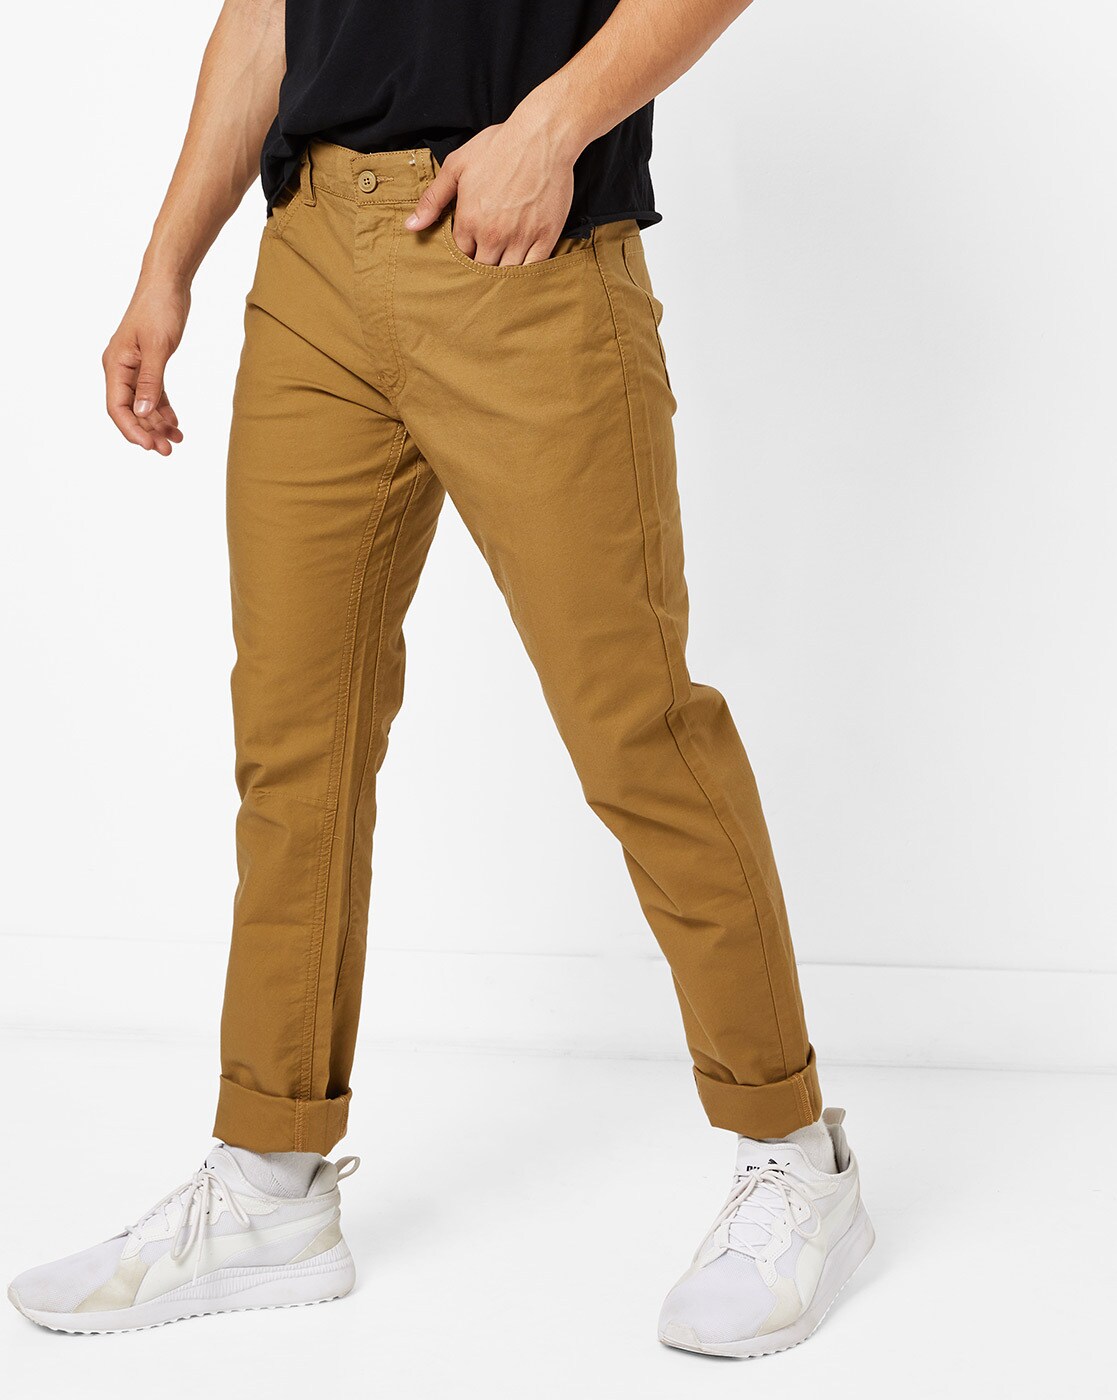 Buy Khaki Trousers & Pants for Men by LEVIS Online 